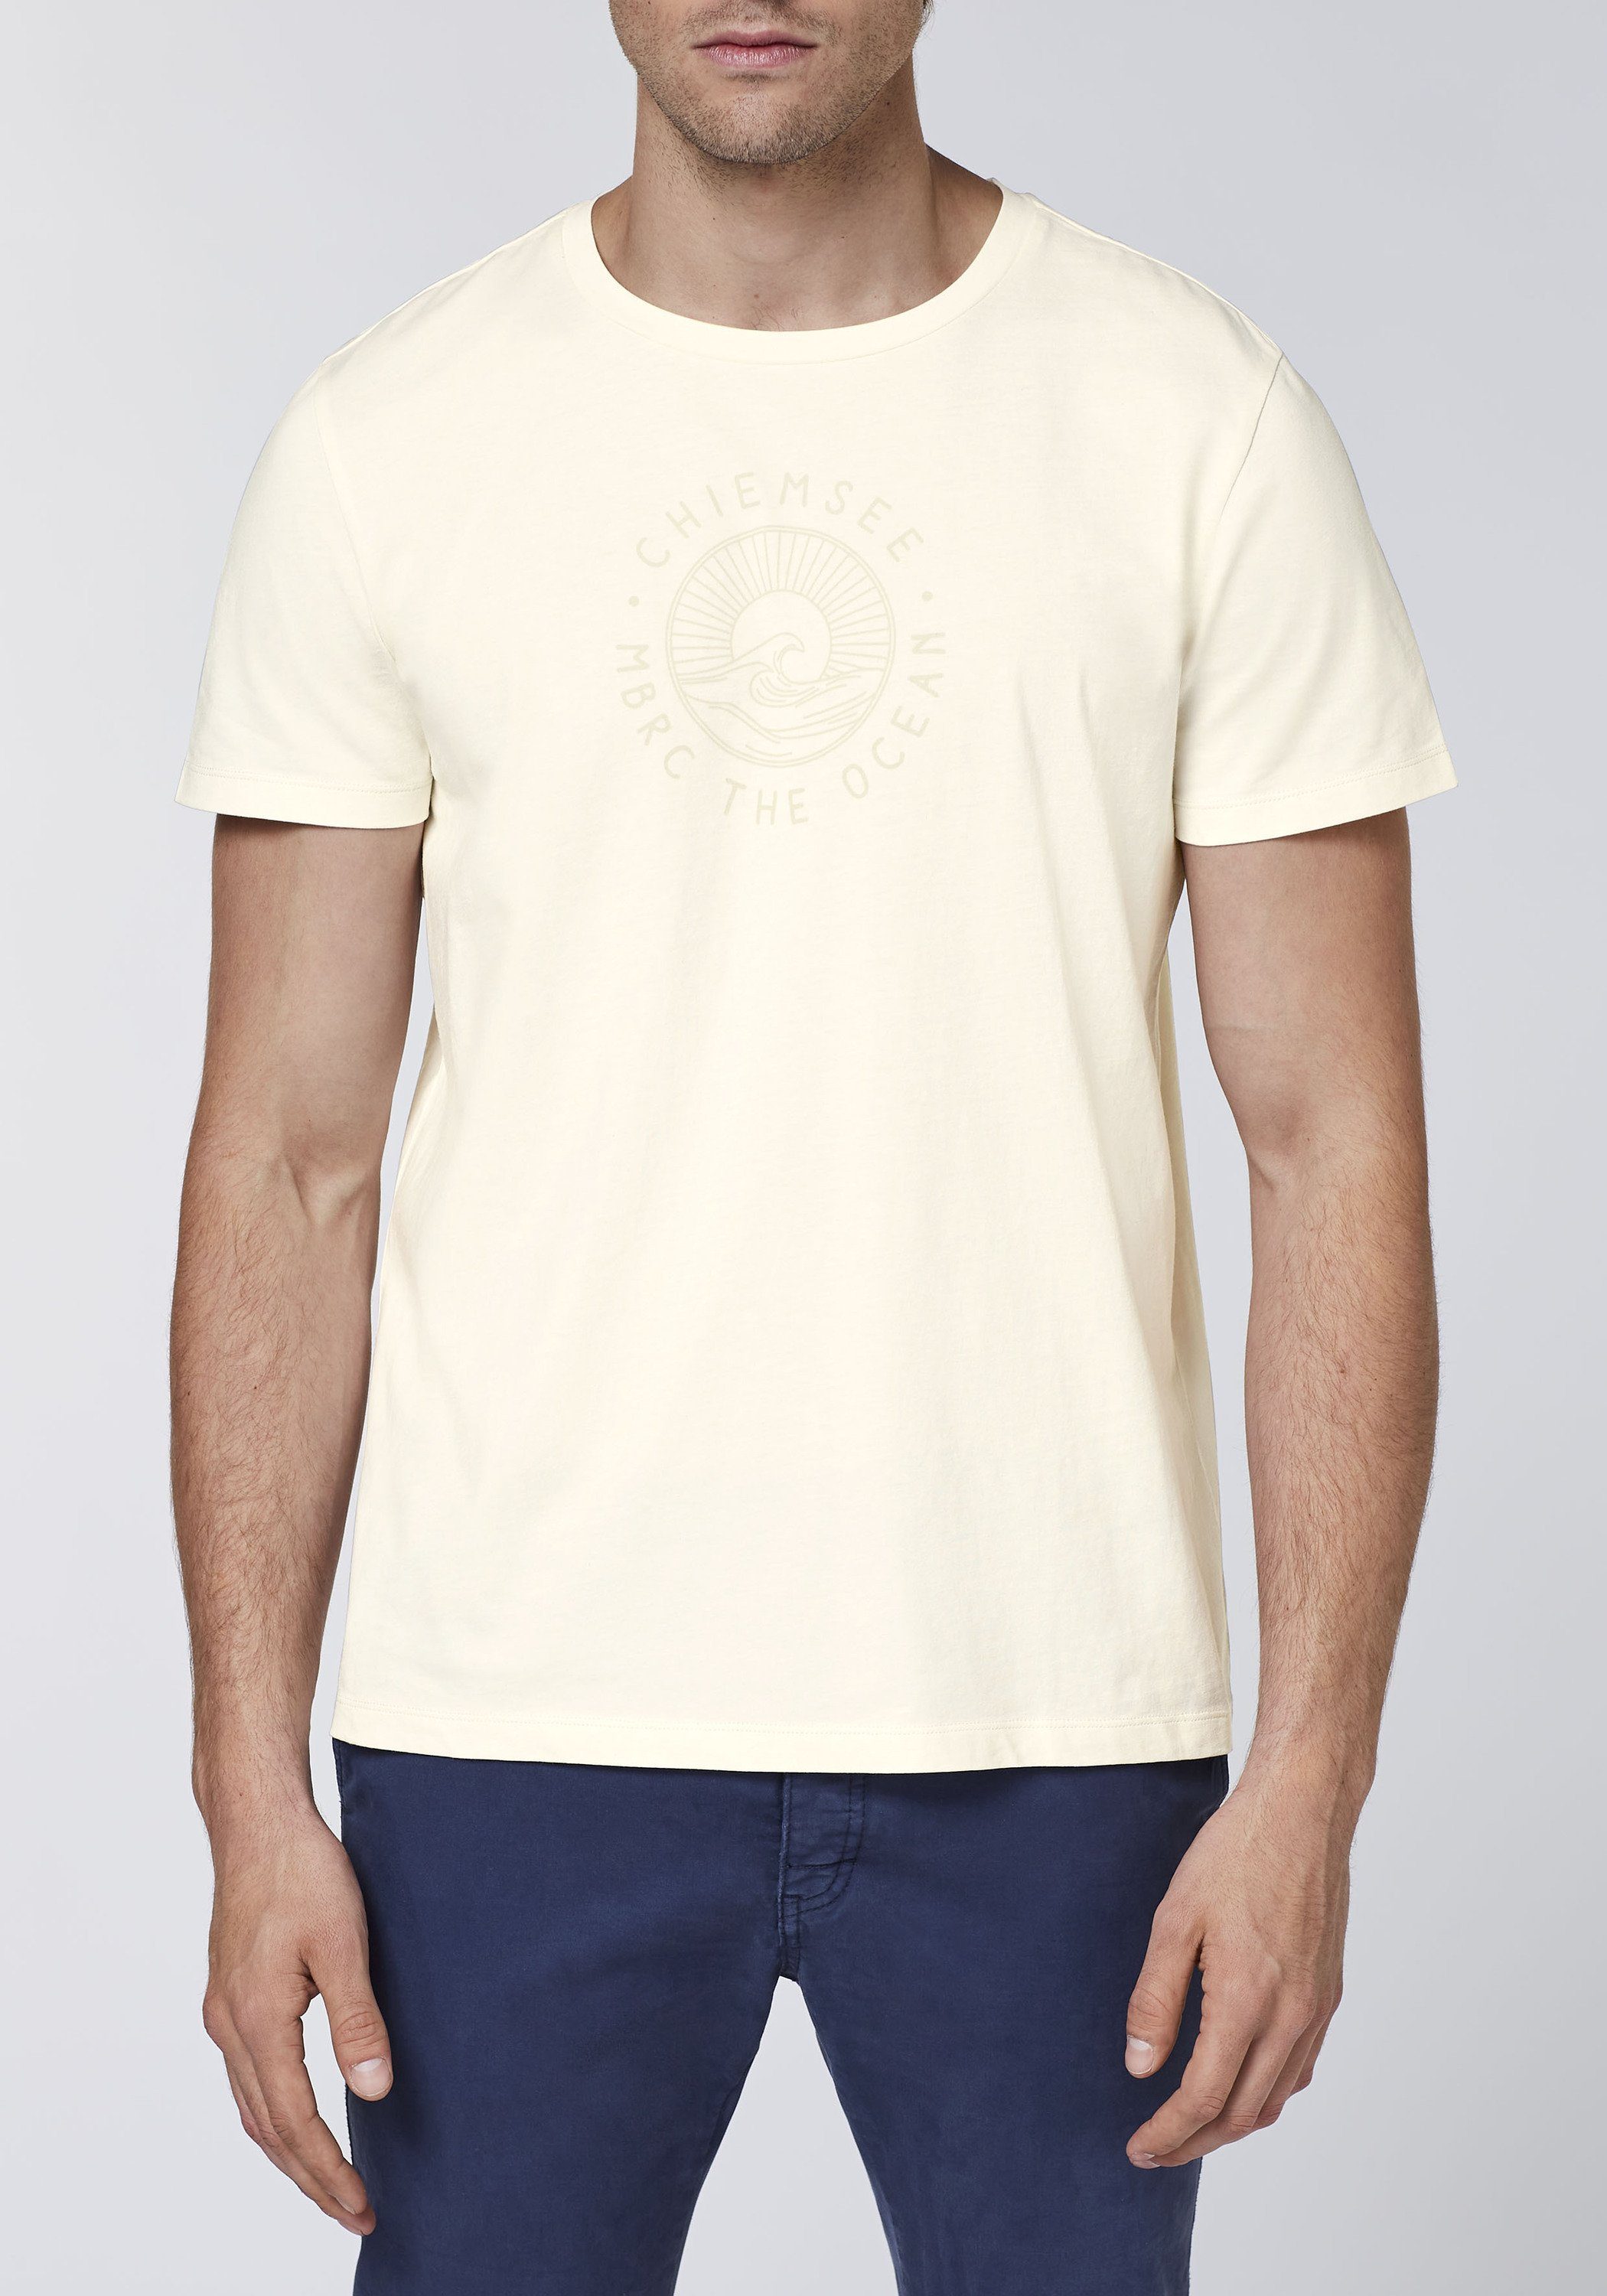 1 Chiemsee Wellenmotiv Natural 12 Print-Shirt T-Shirt mit